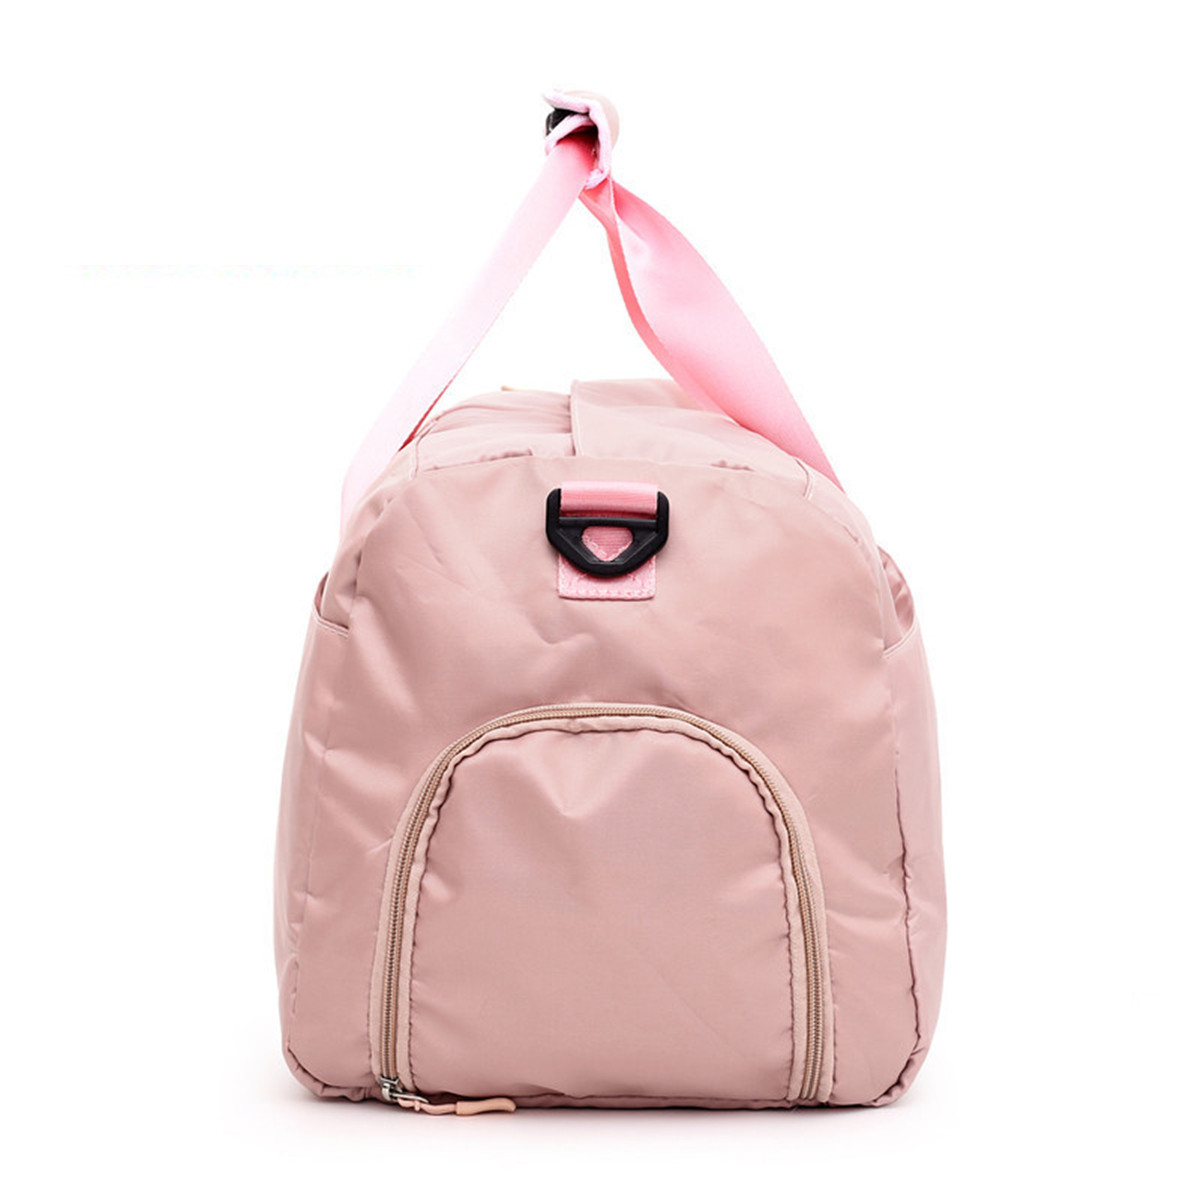 3PCS-Waterproof-Oxford-Cloth-Shoulder-Bag-Wet-dry-Seperation-Shoes-Bag-Fitness-Yoga-Handbag-Travel-L-1609500-8